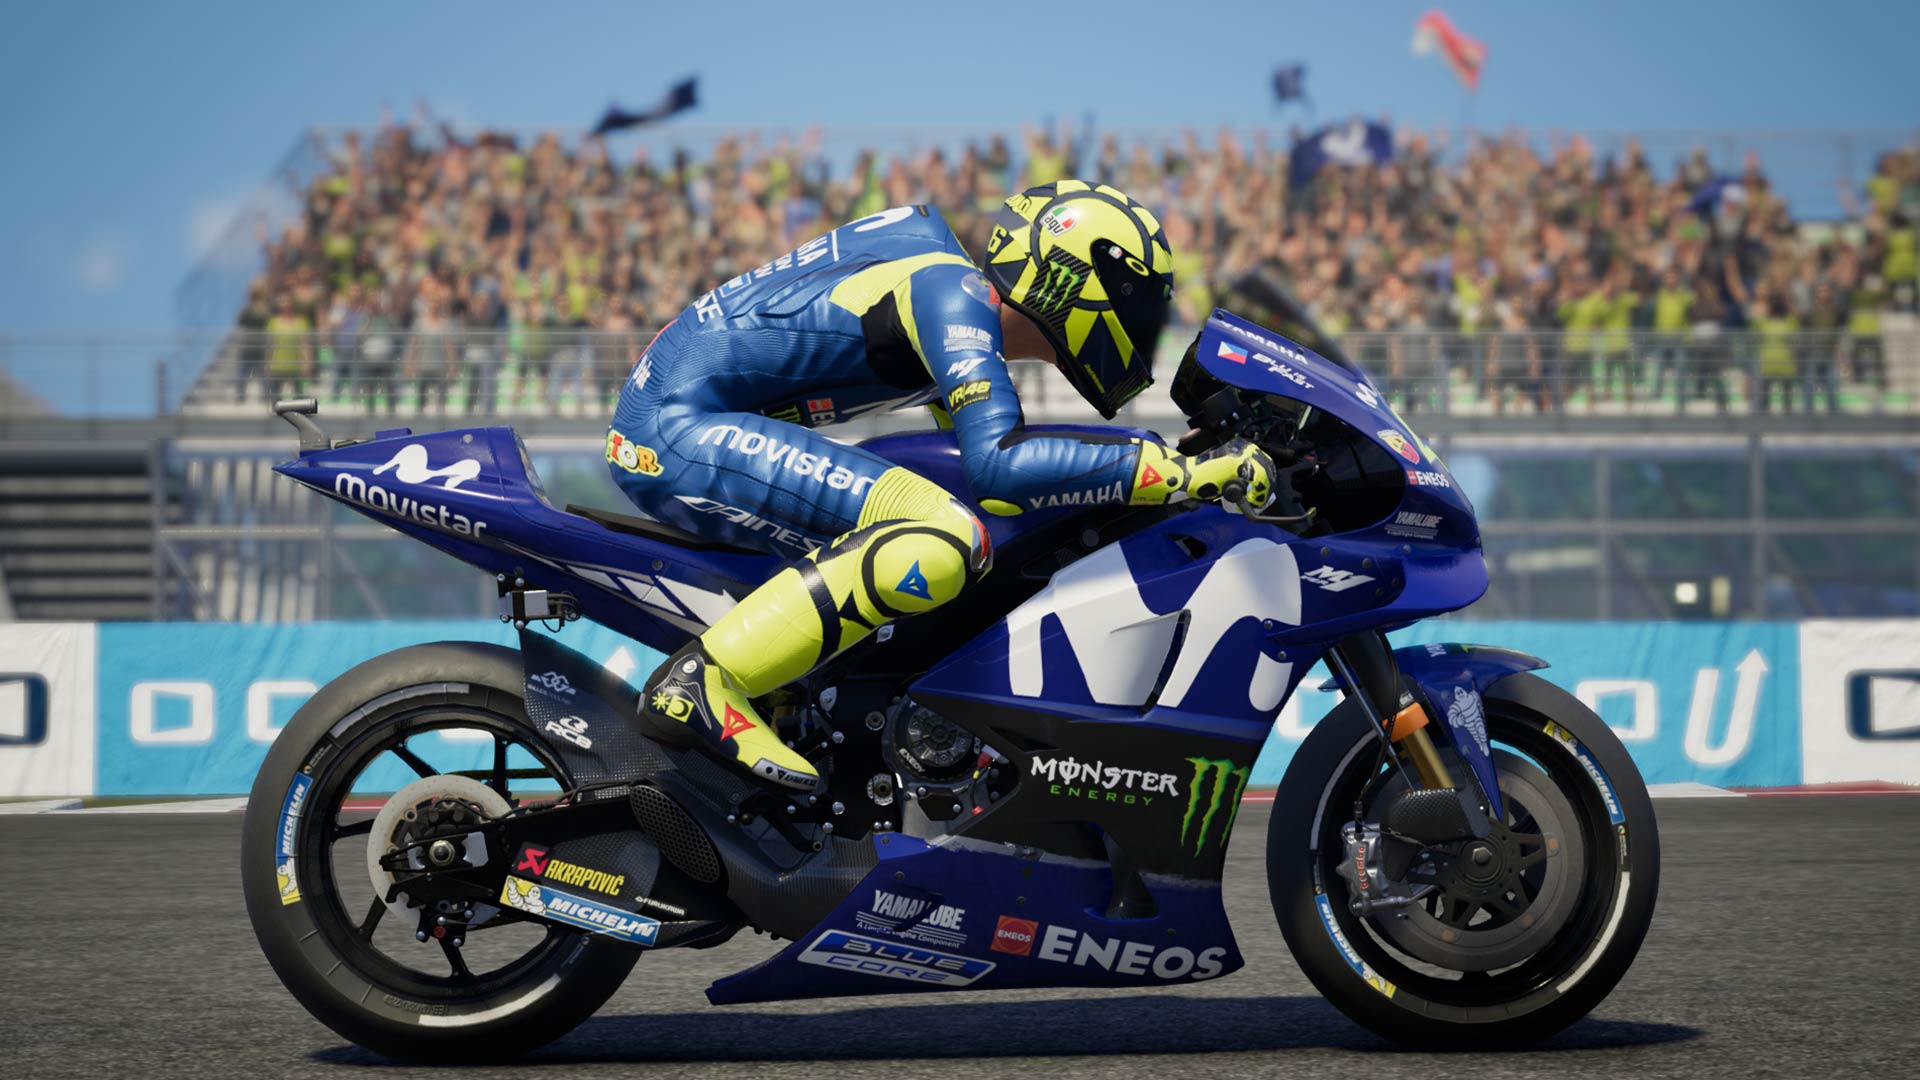 MotoGP™18 on Steam